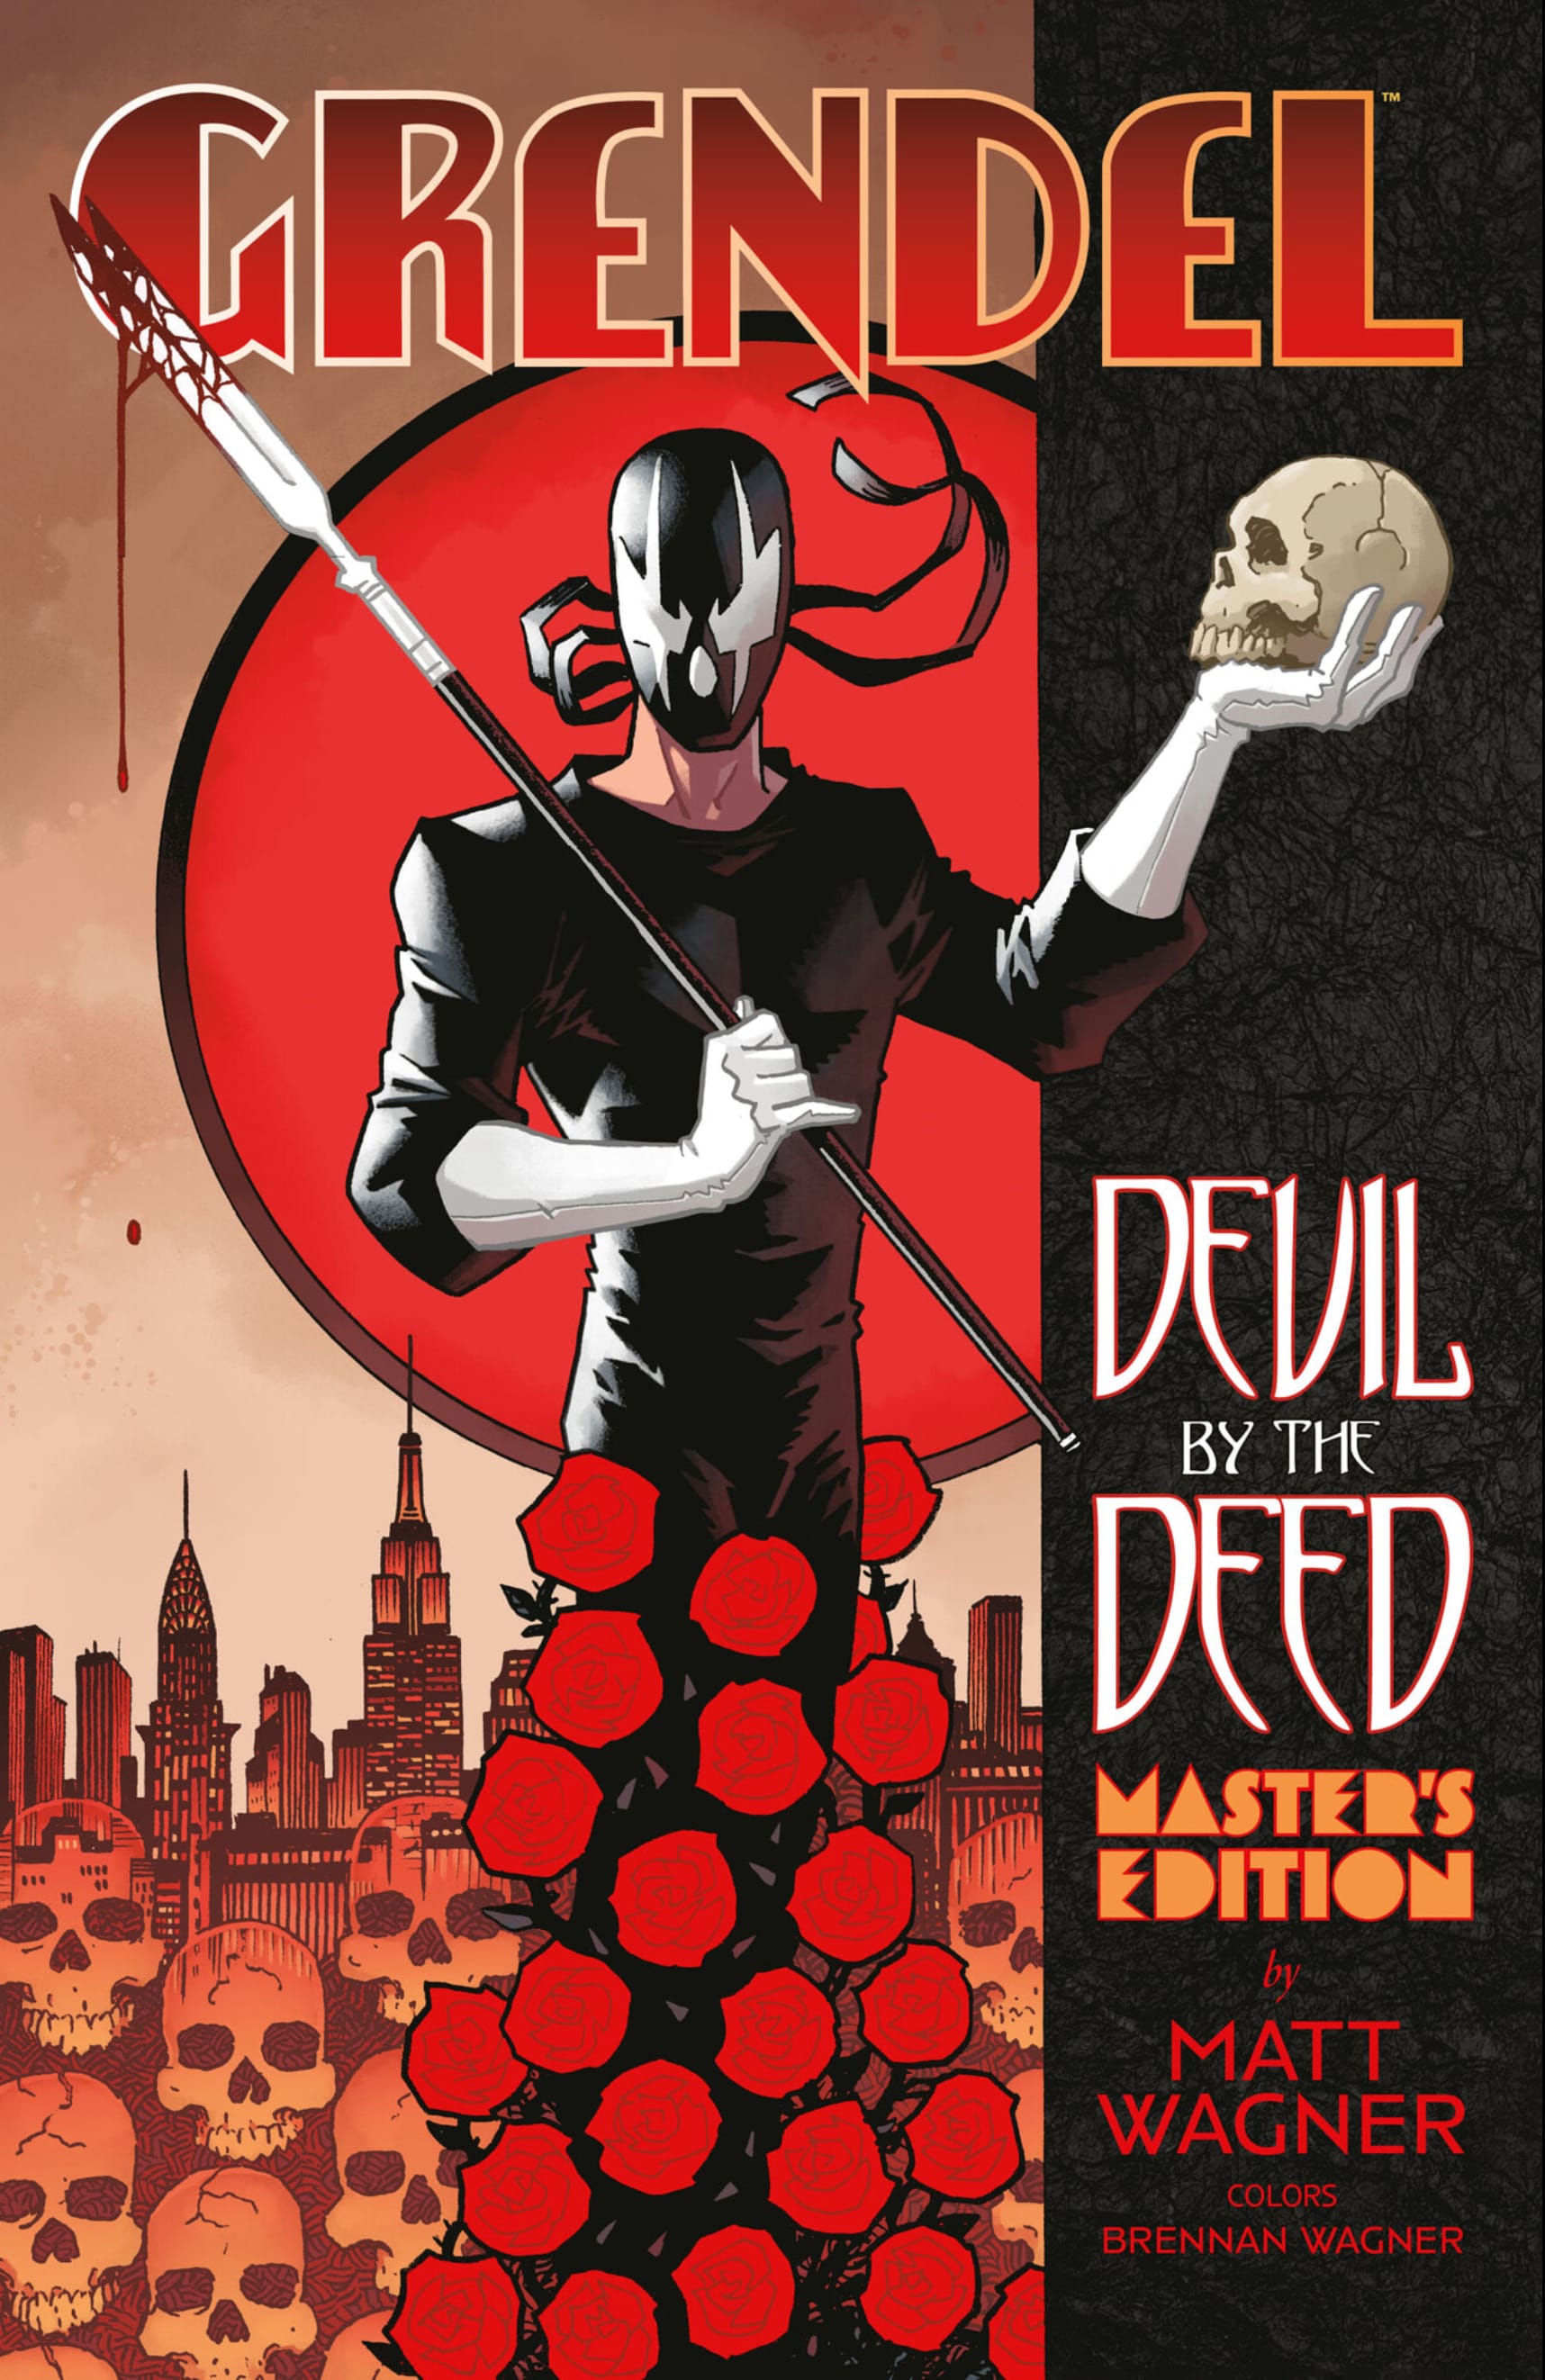 The Devil Redux in Matt Wagner's Grendel Devil By The Deed Master’s Edition